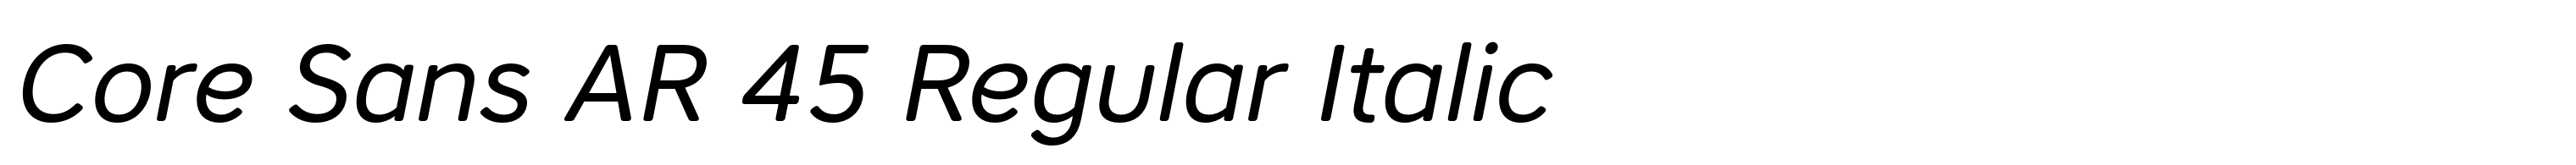 Core Sans AR 45 Regular Italic